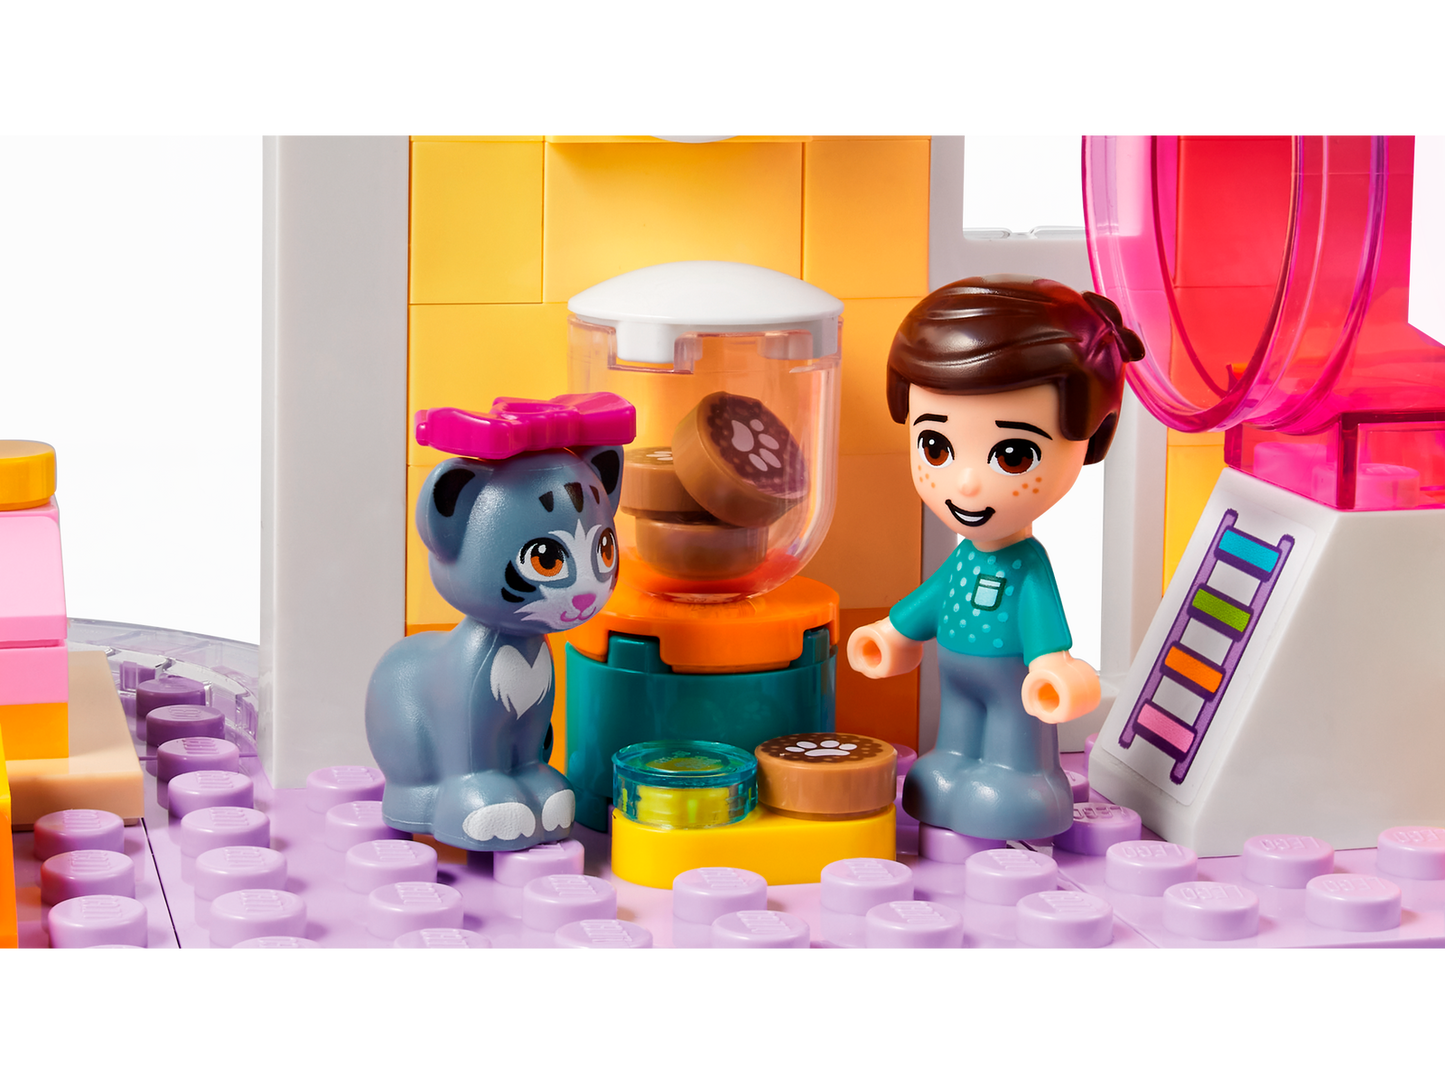 LEGO Friends Pet Day-Care Center 41718